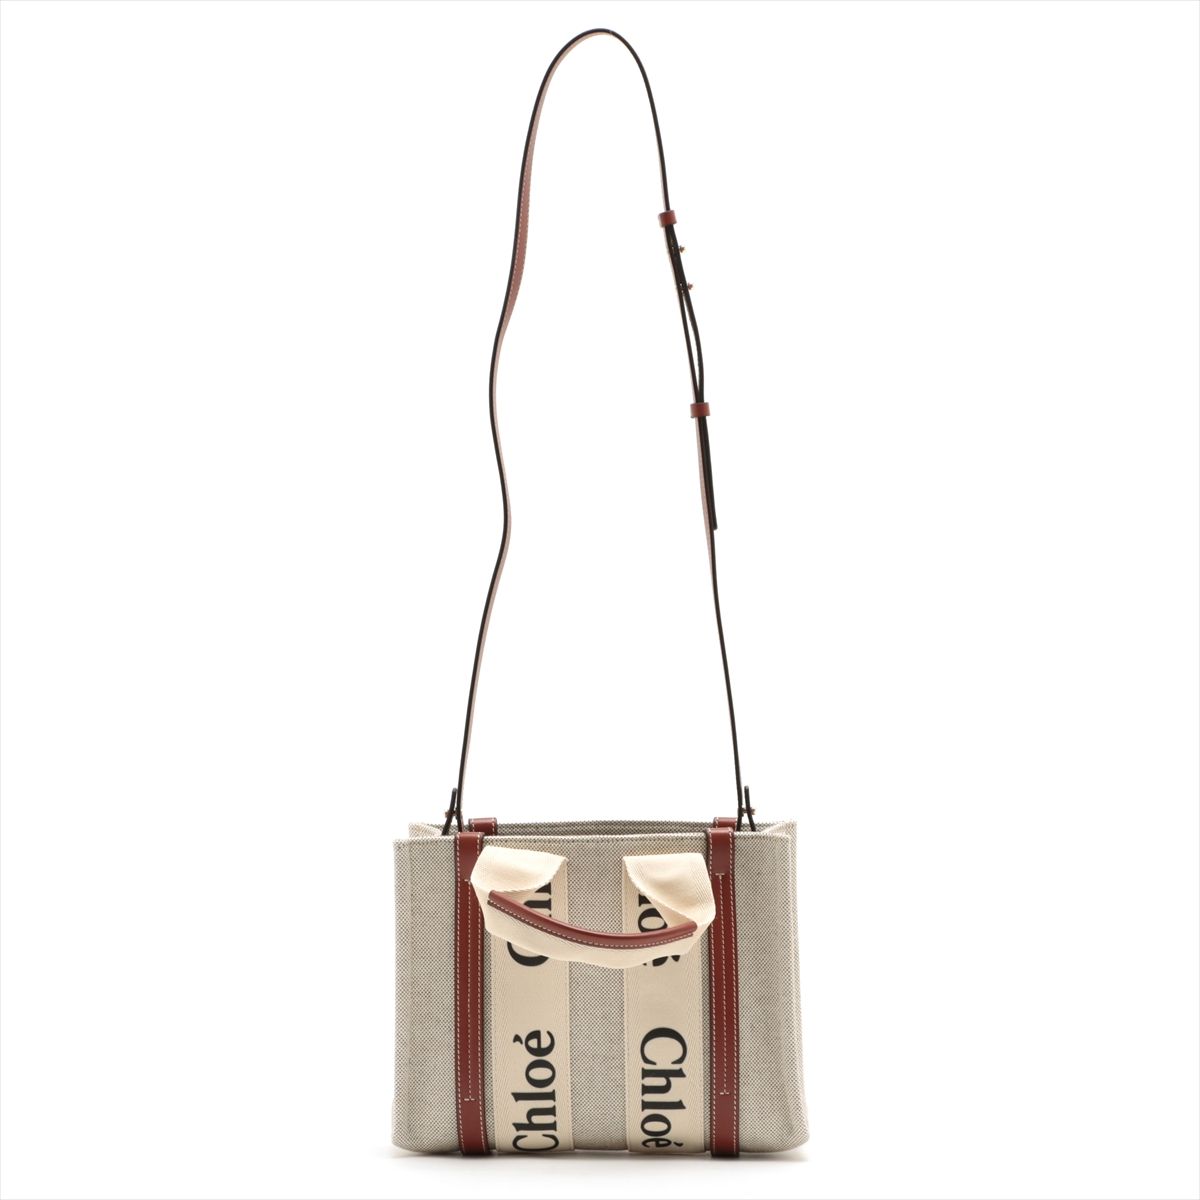 CHLOE Chloe Woody Tote Bag Small in Brown Leather & Linen - Vault 55